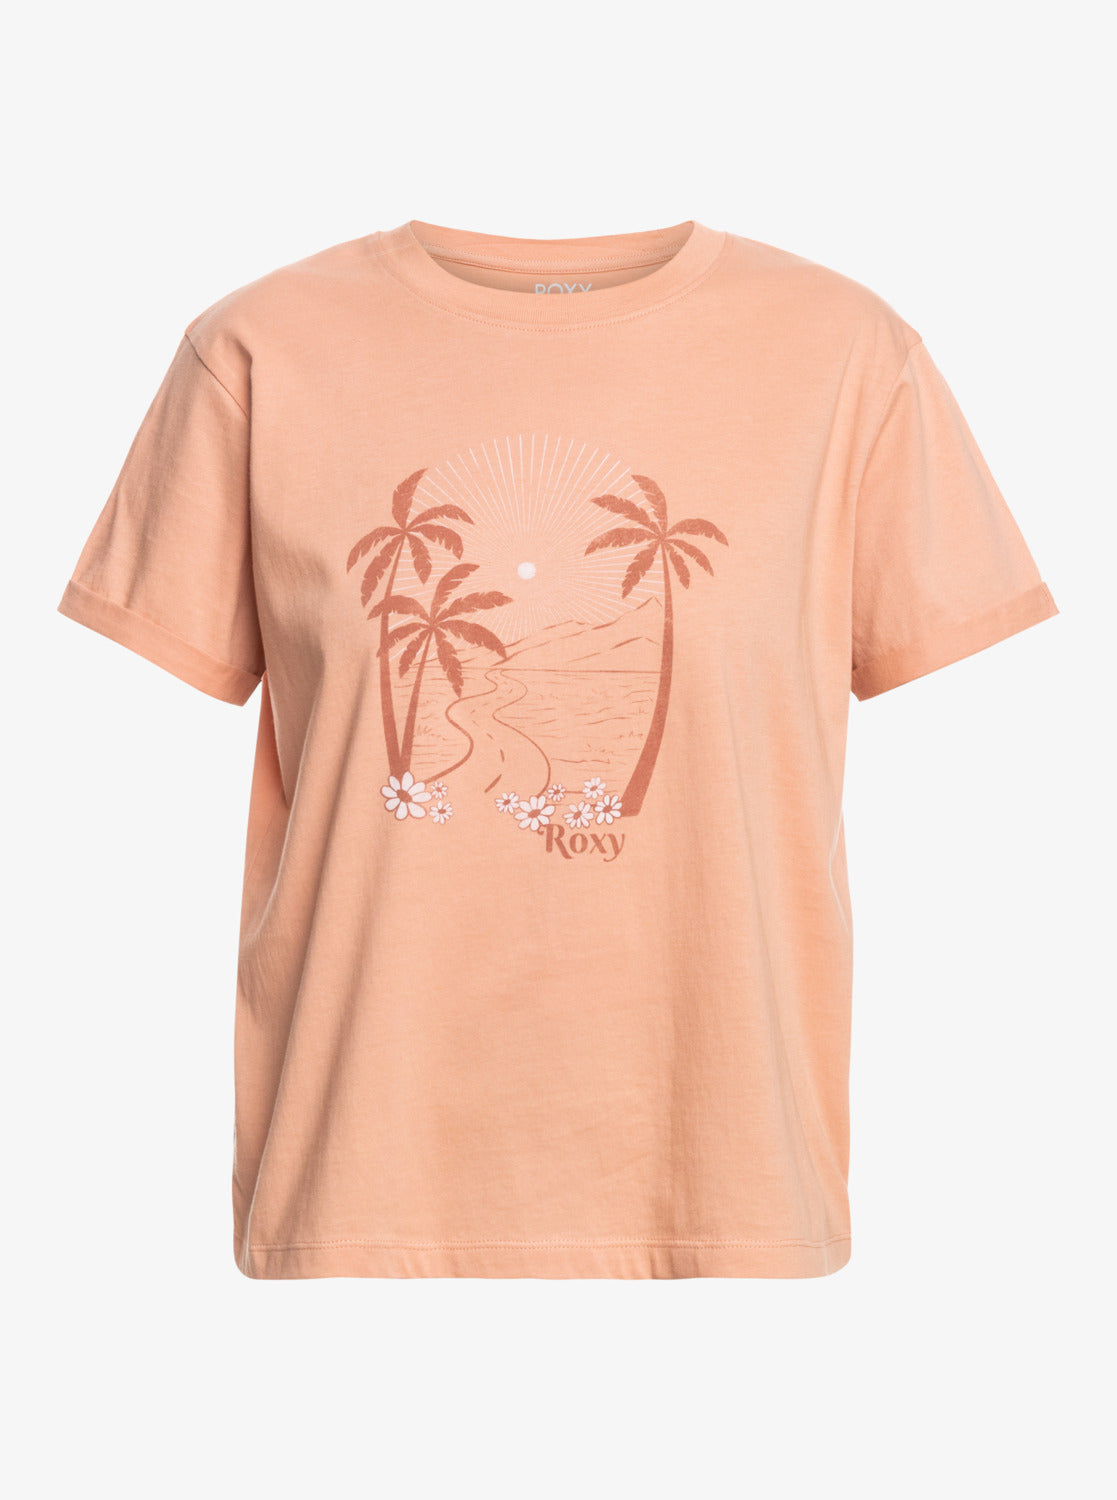 Roxy Summer Fun Camiseta Mujer